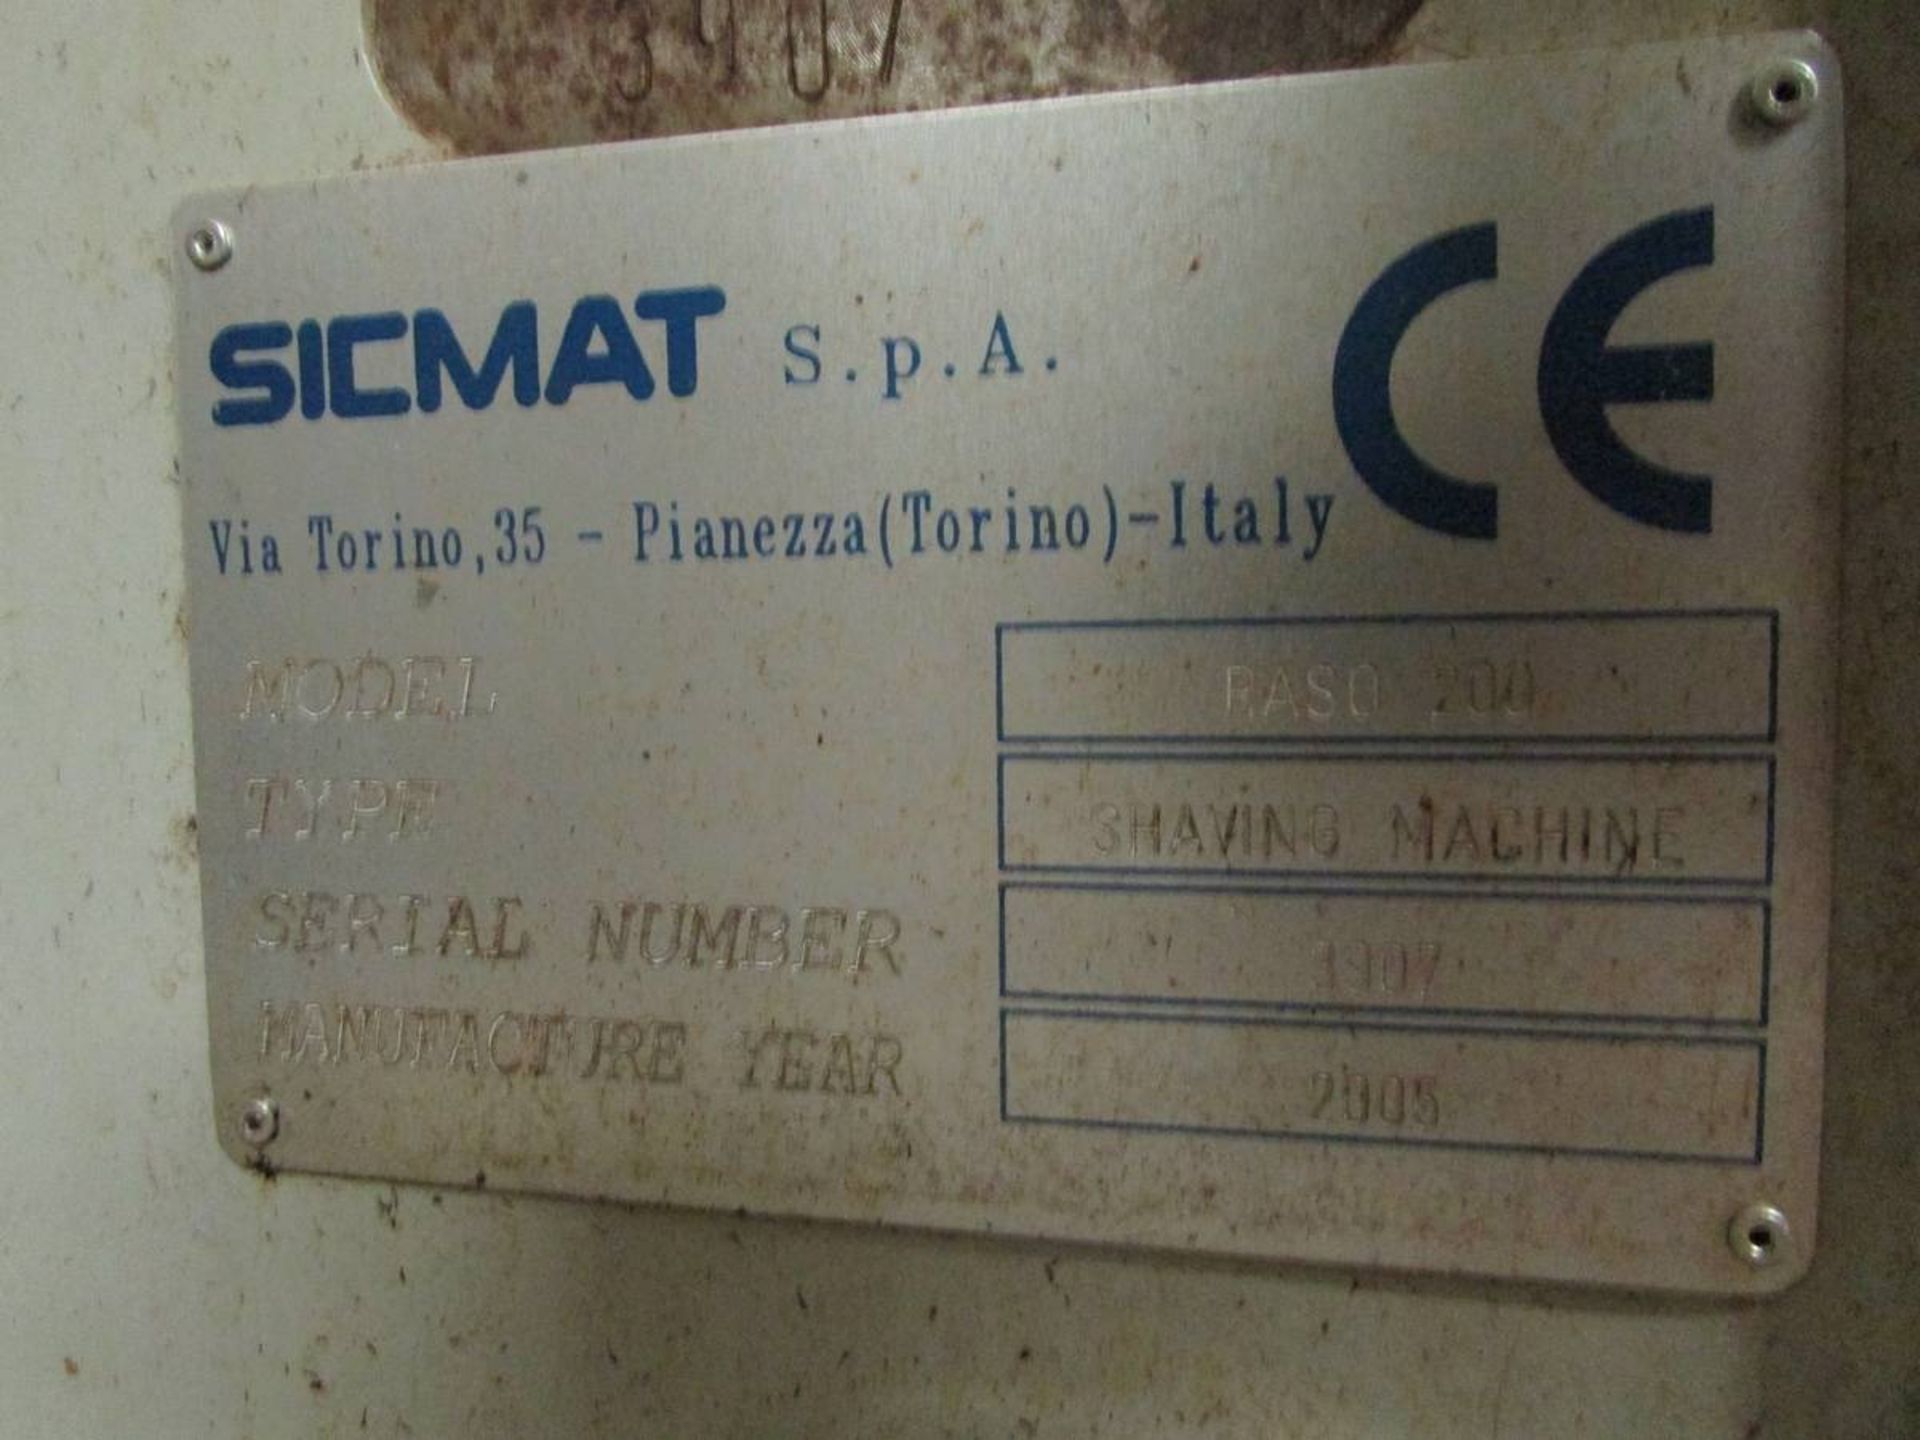 2005 Sicmat RASO 200 5 AX CNC Gear Shaving Machine - Image 14 of 14